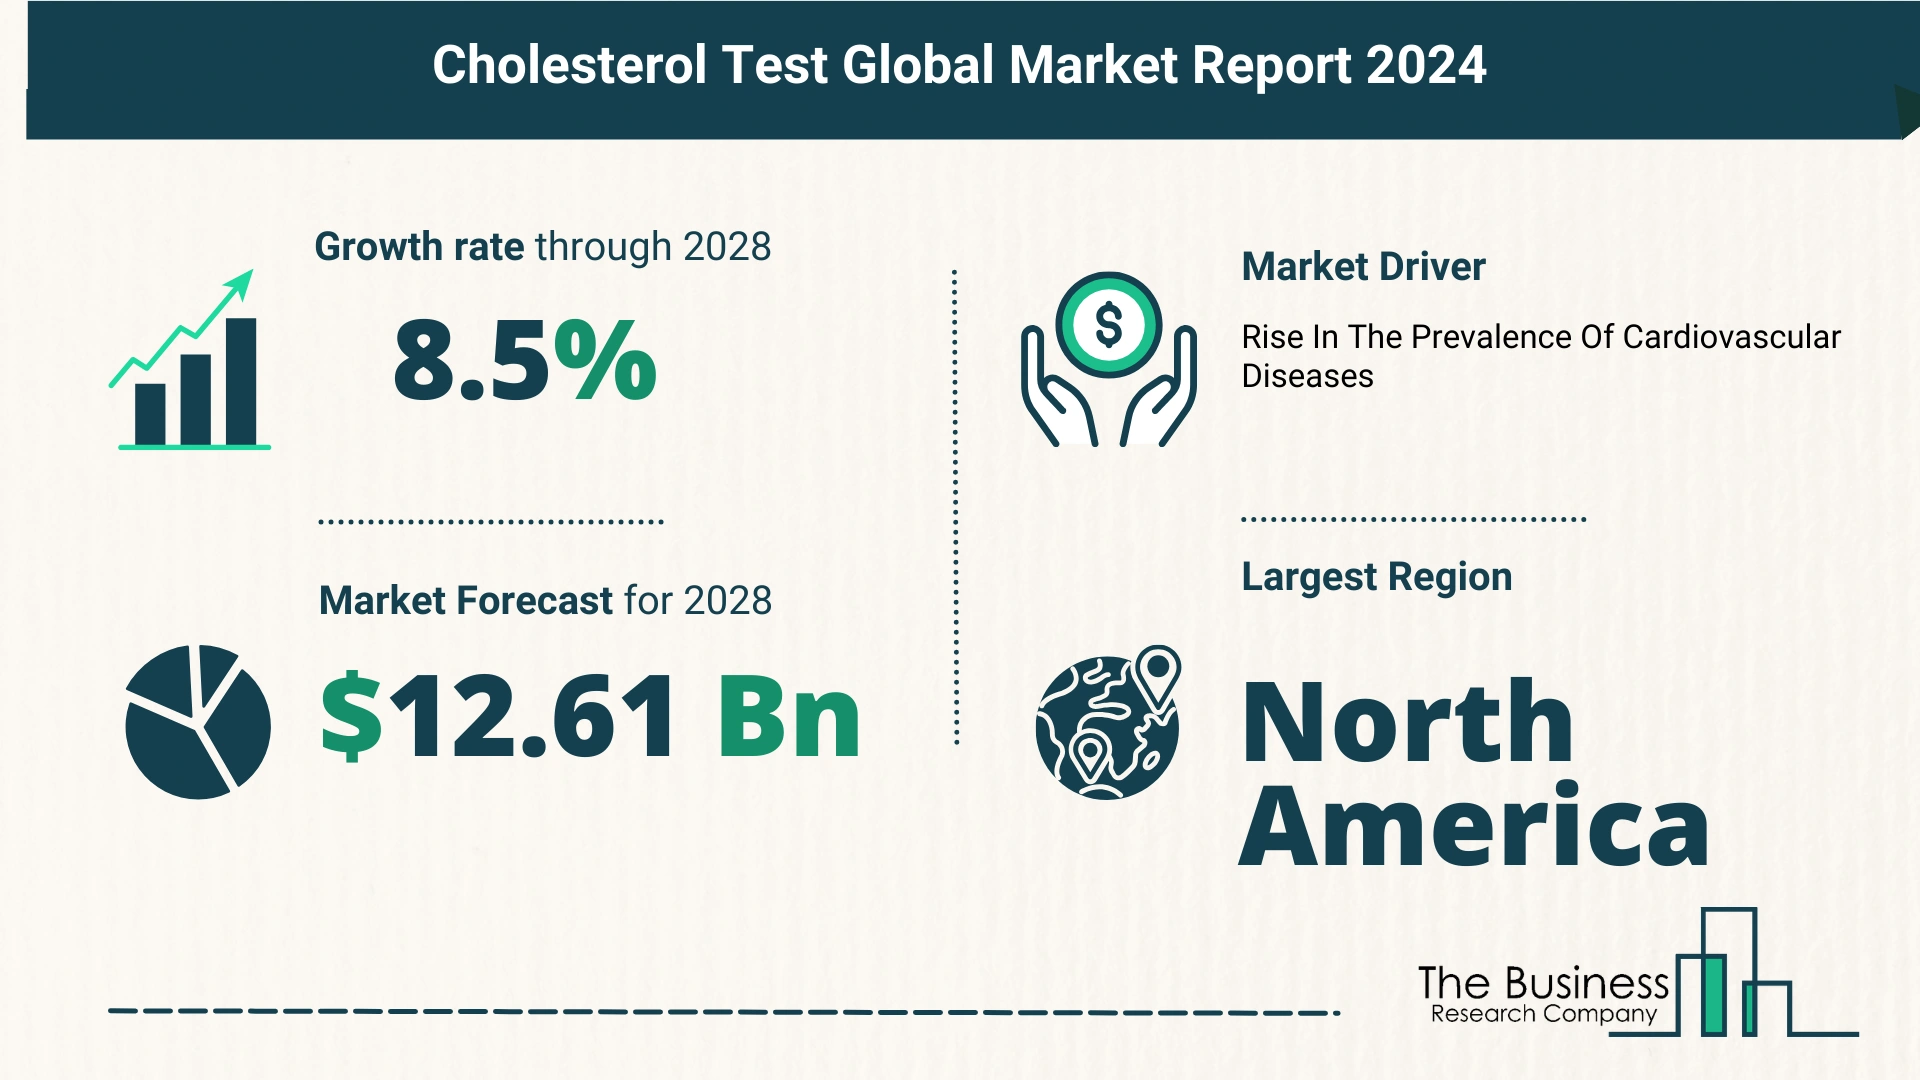 Global Cholesterol Test Market Size